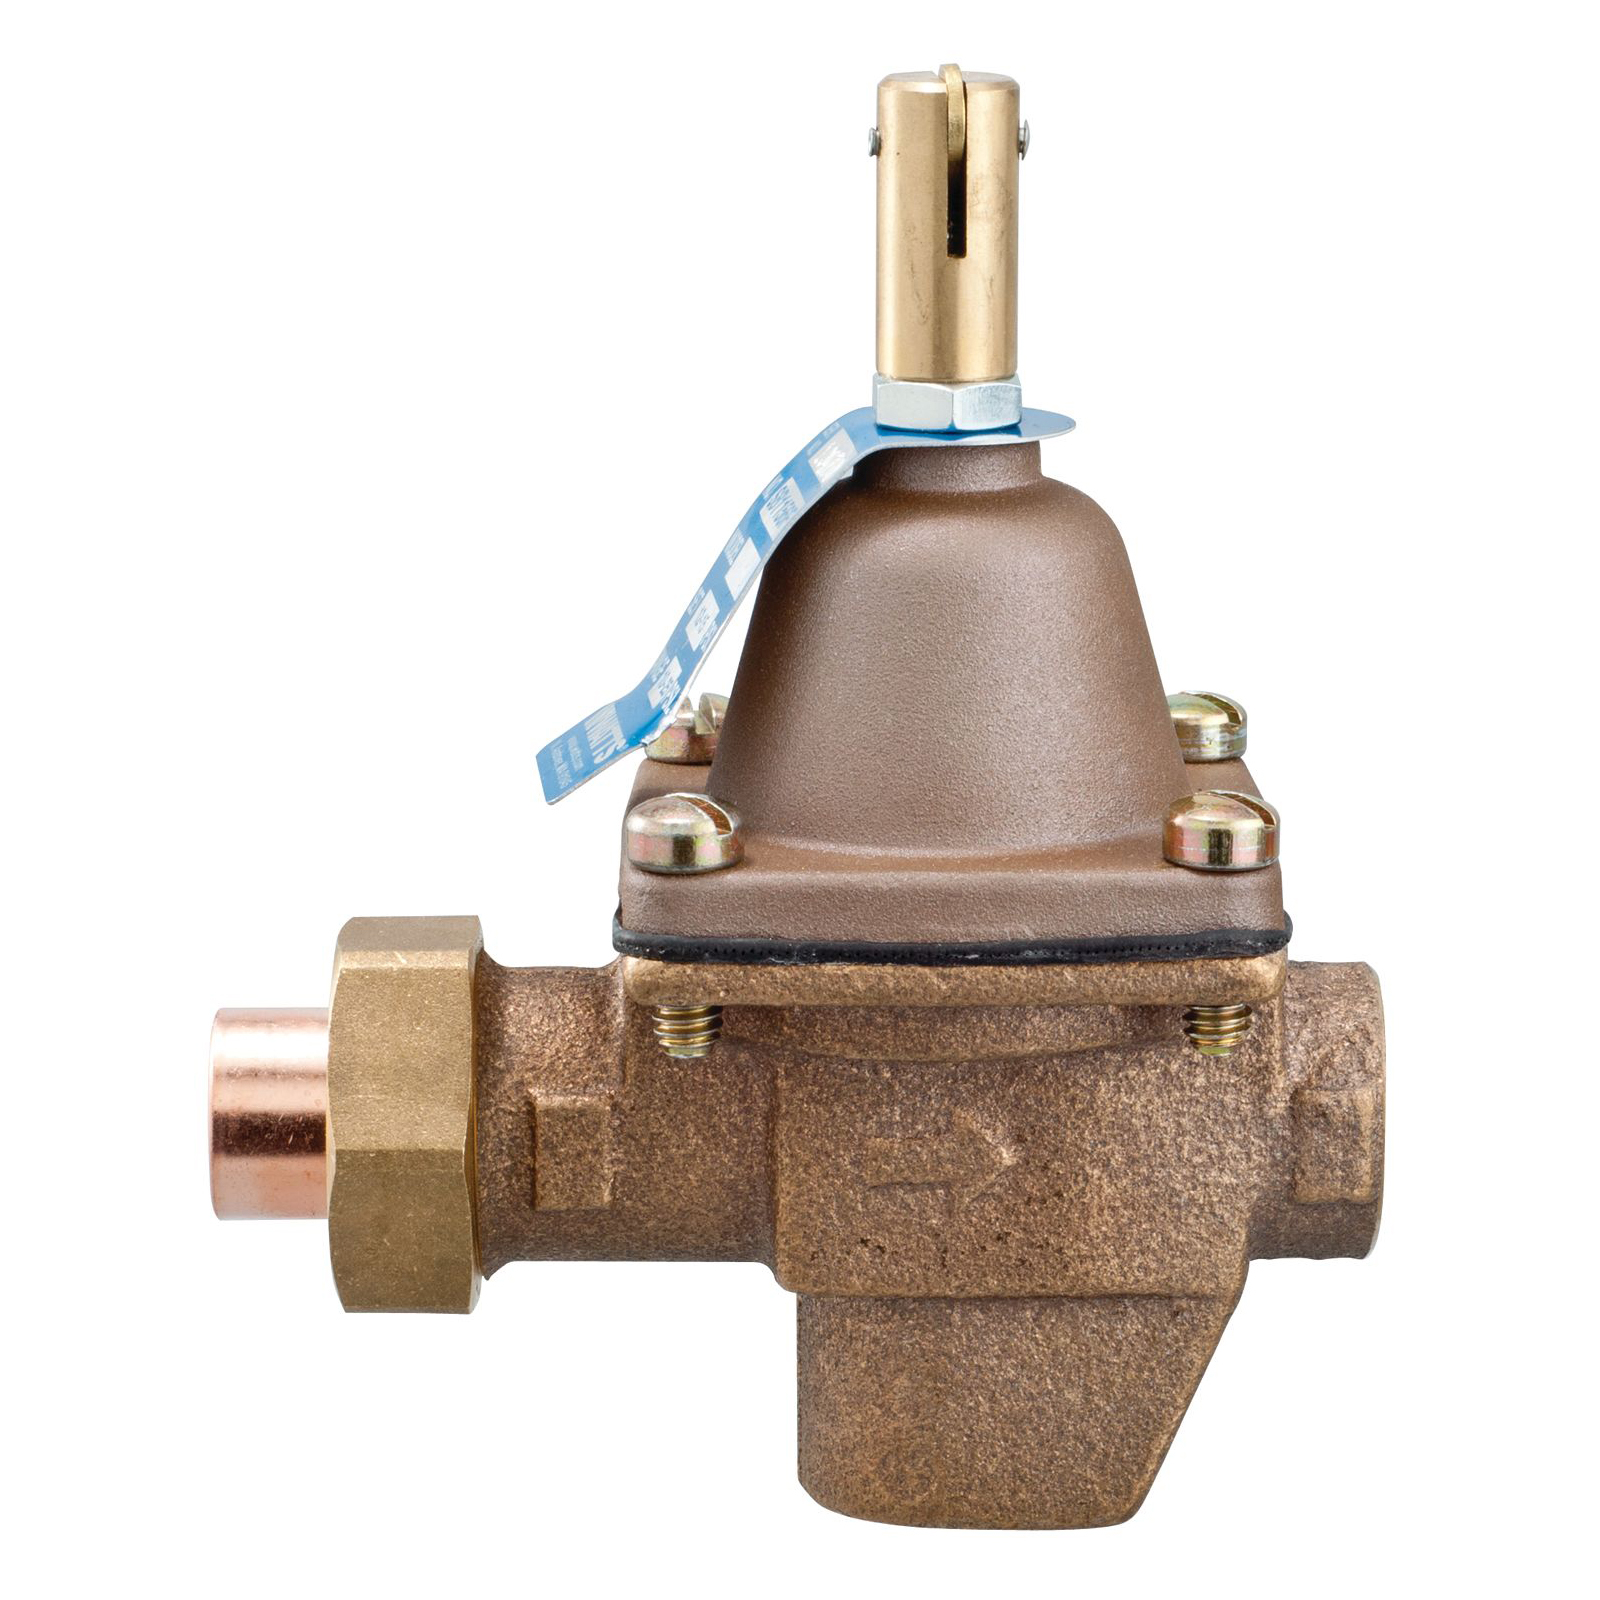 WATTS® 0386422 1156 Water Pressure Regulator, 1/2 in Nominal, Union Solder Inlet End Style, 100 psi Pressure, Bronze Body, Domestic